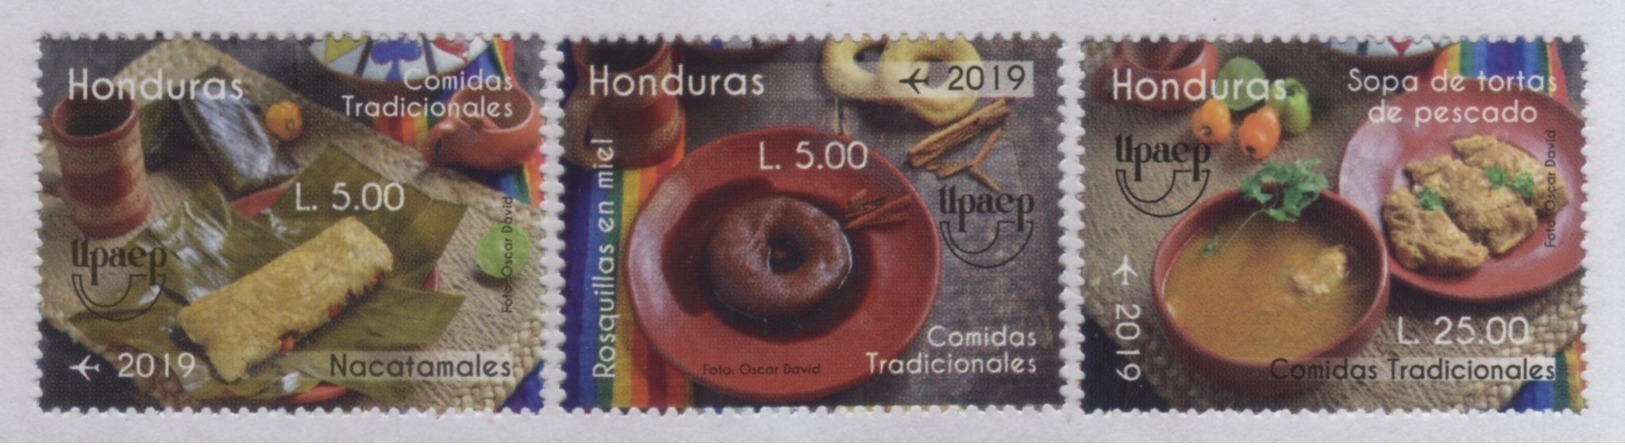 Honduras, Series UPAEP Traditional Meals (Nacatamales, Fish Cake Soup, Honey Donuts) New Emission 2019, MNH - Honduras